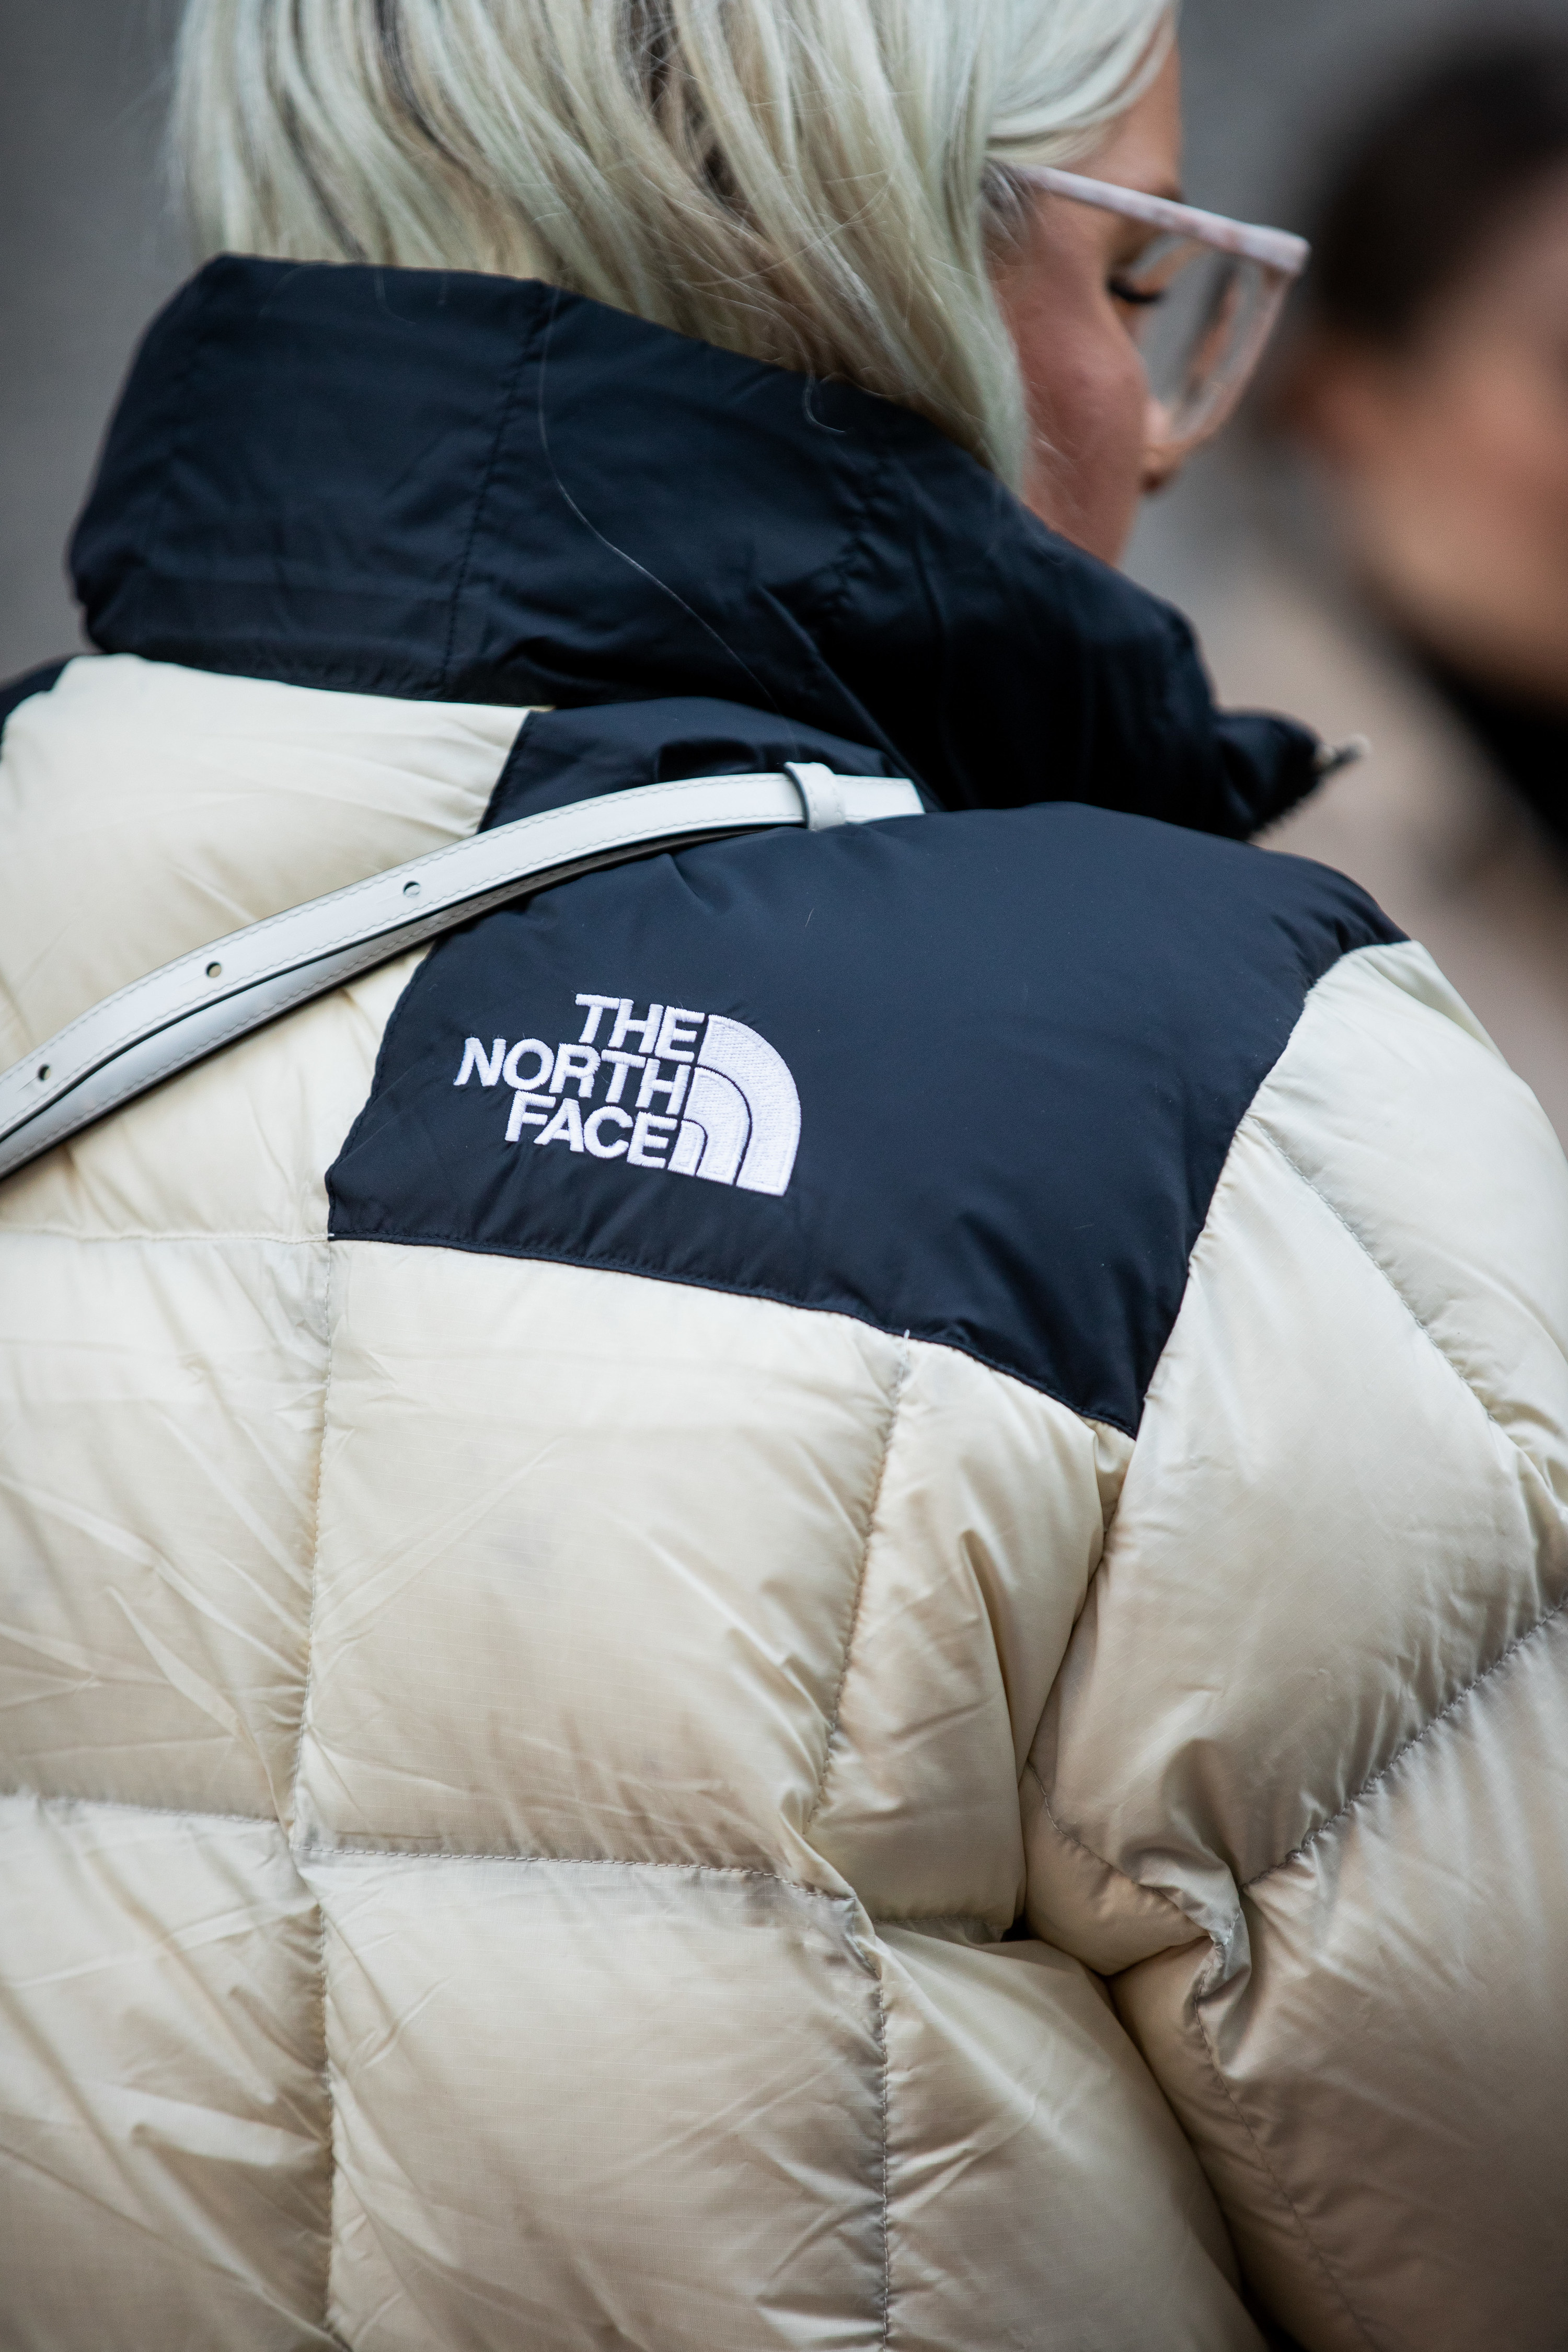 an up-close shot of a north face jacket